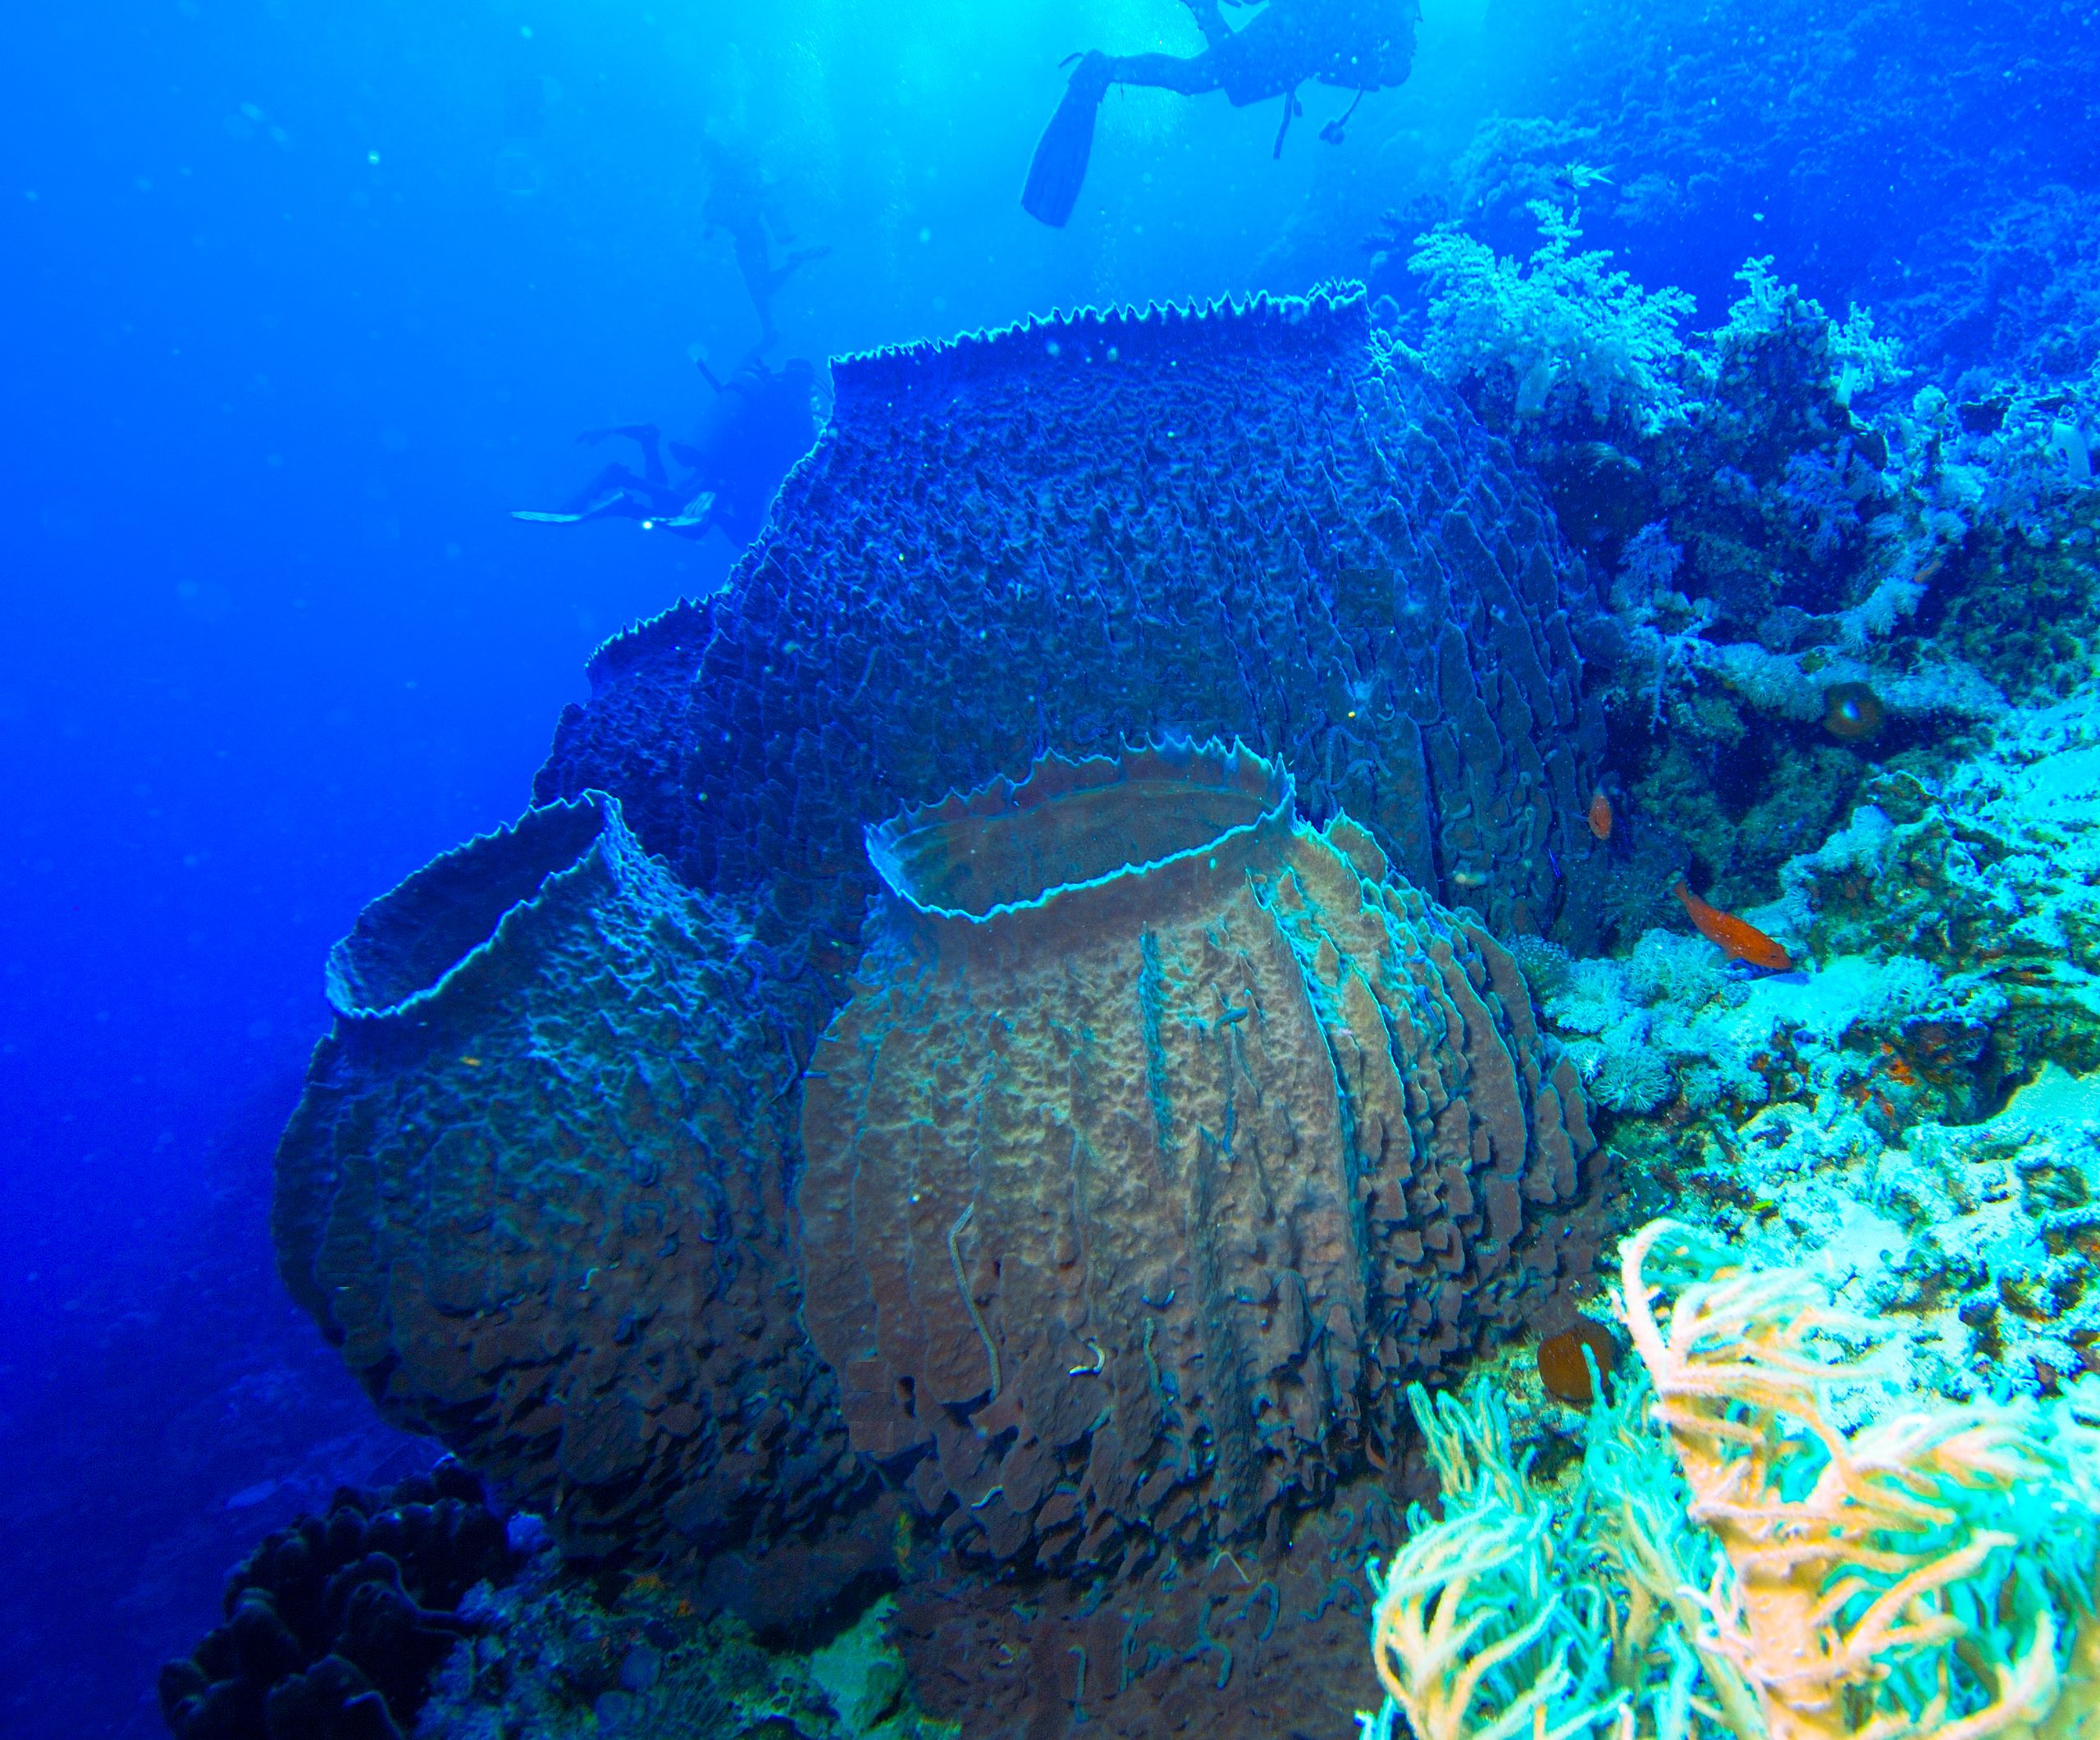 Photograph of giant barrel sponges (Xestospongia testudinaria)